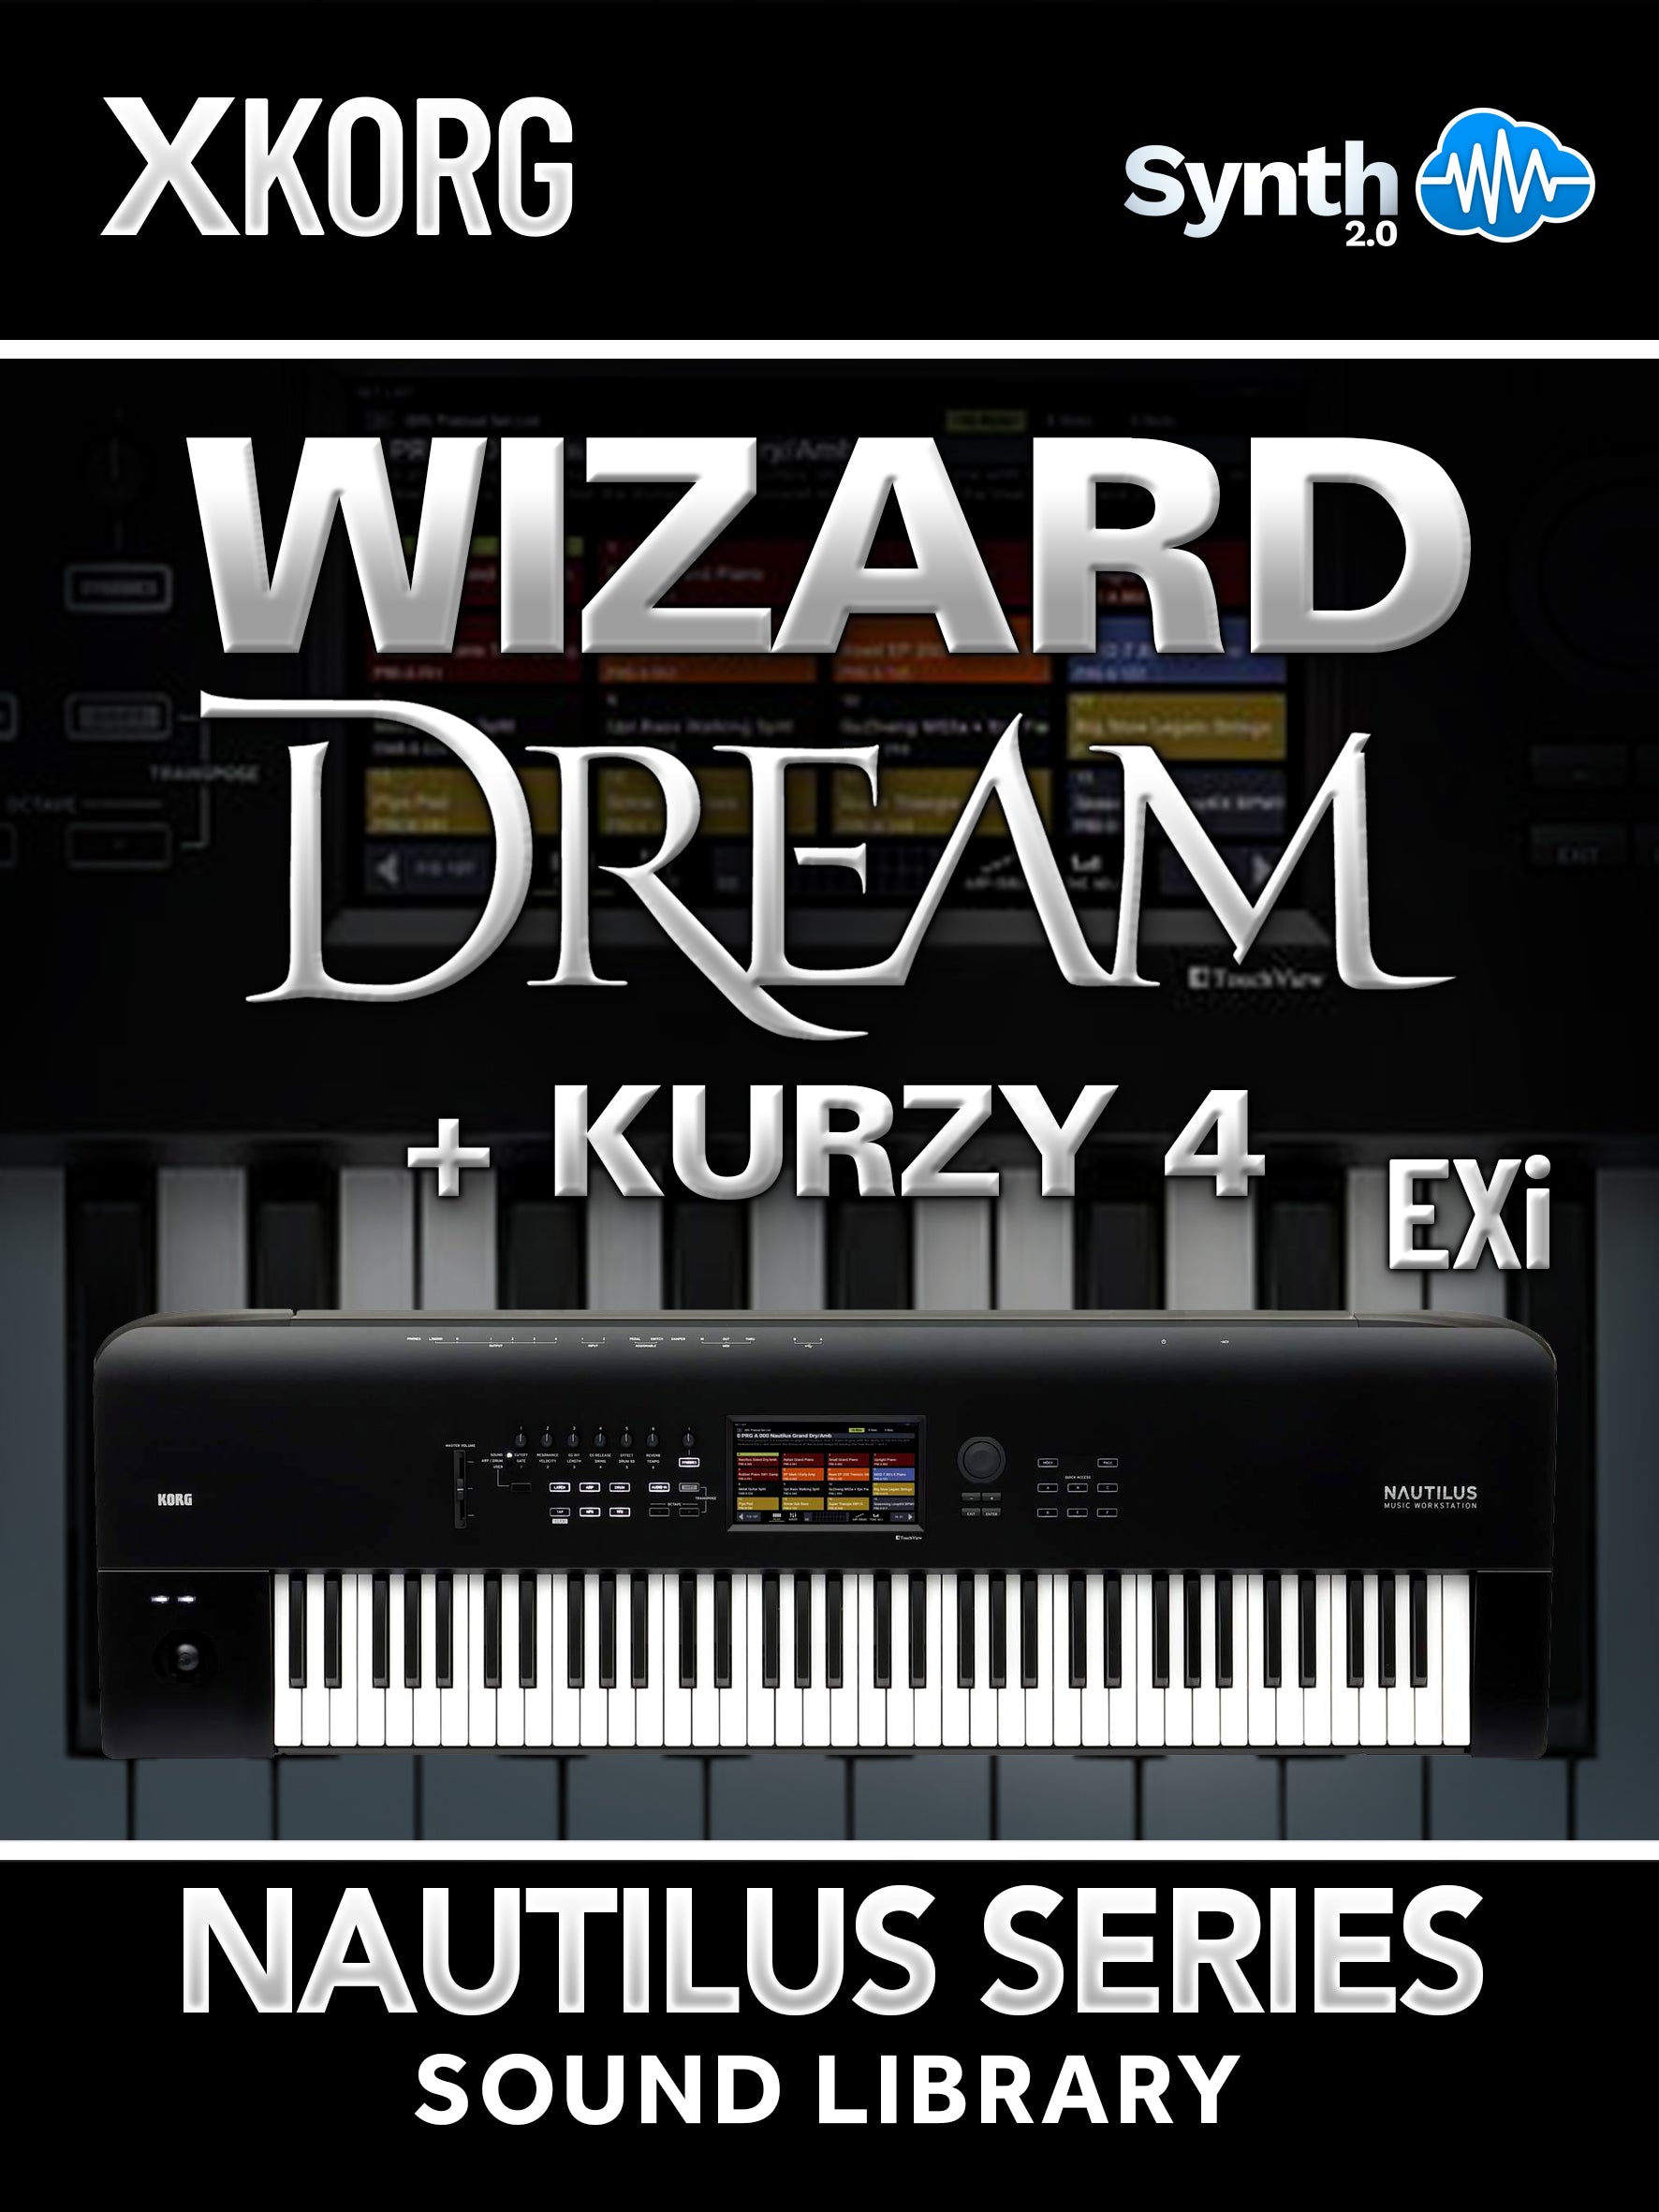 SSX001 - Wizard Dream EXi + Kurzy 4 - Korg Nautilus Series ( 50 presets )